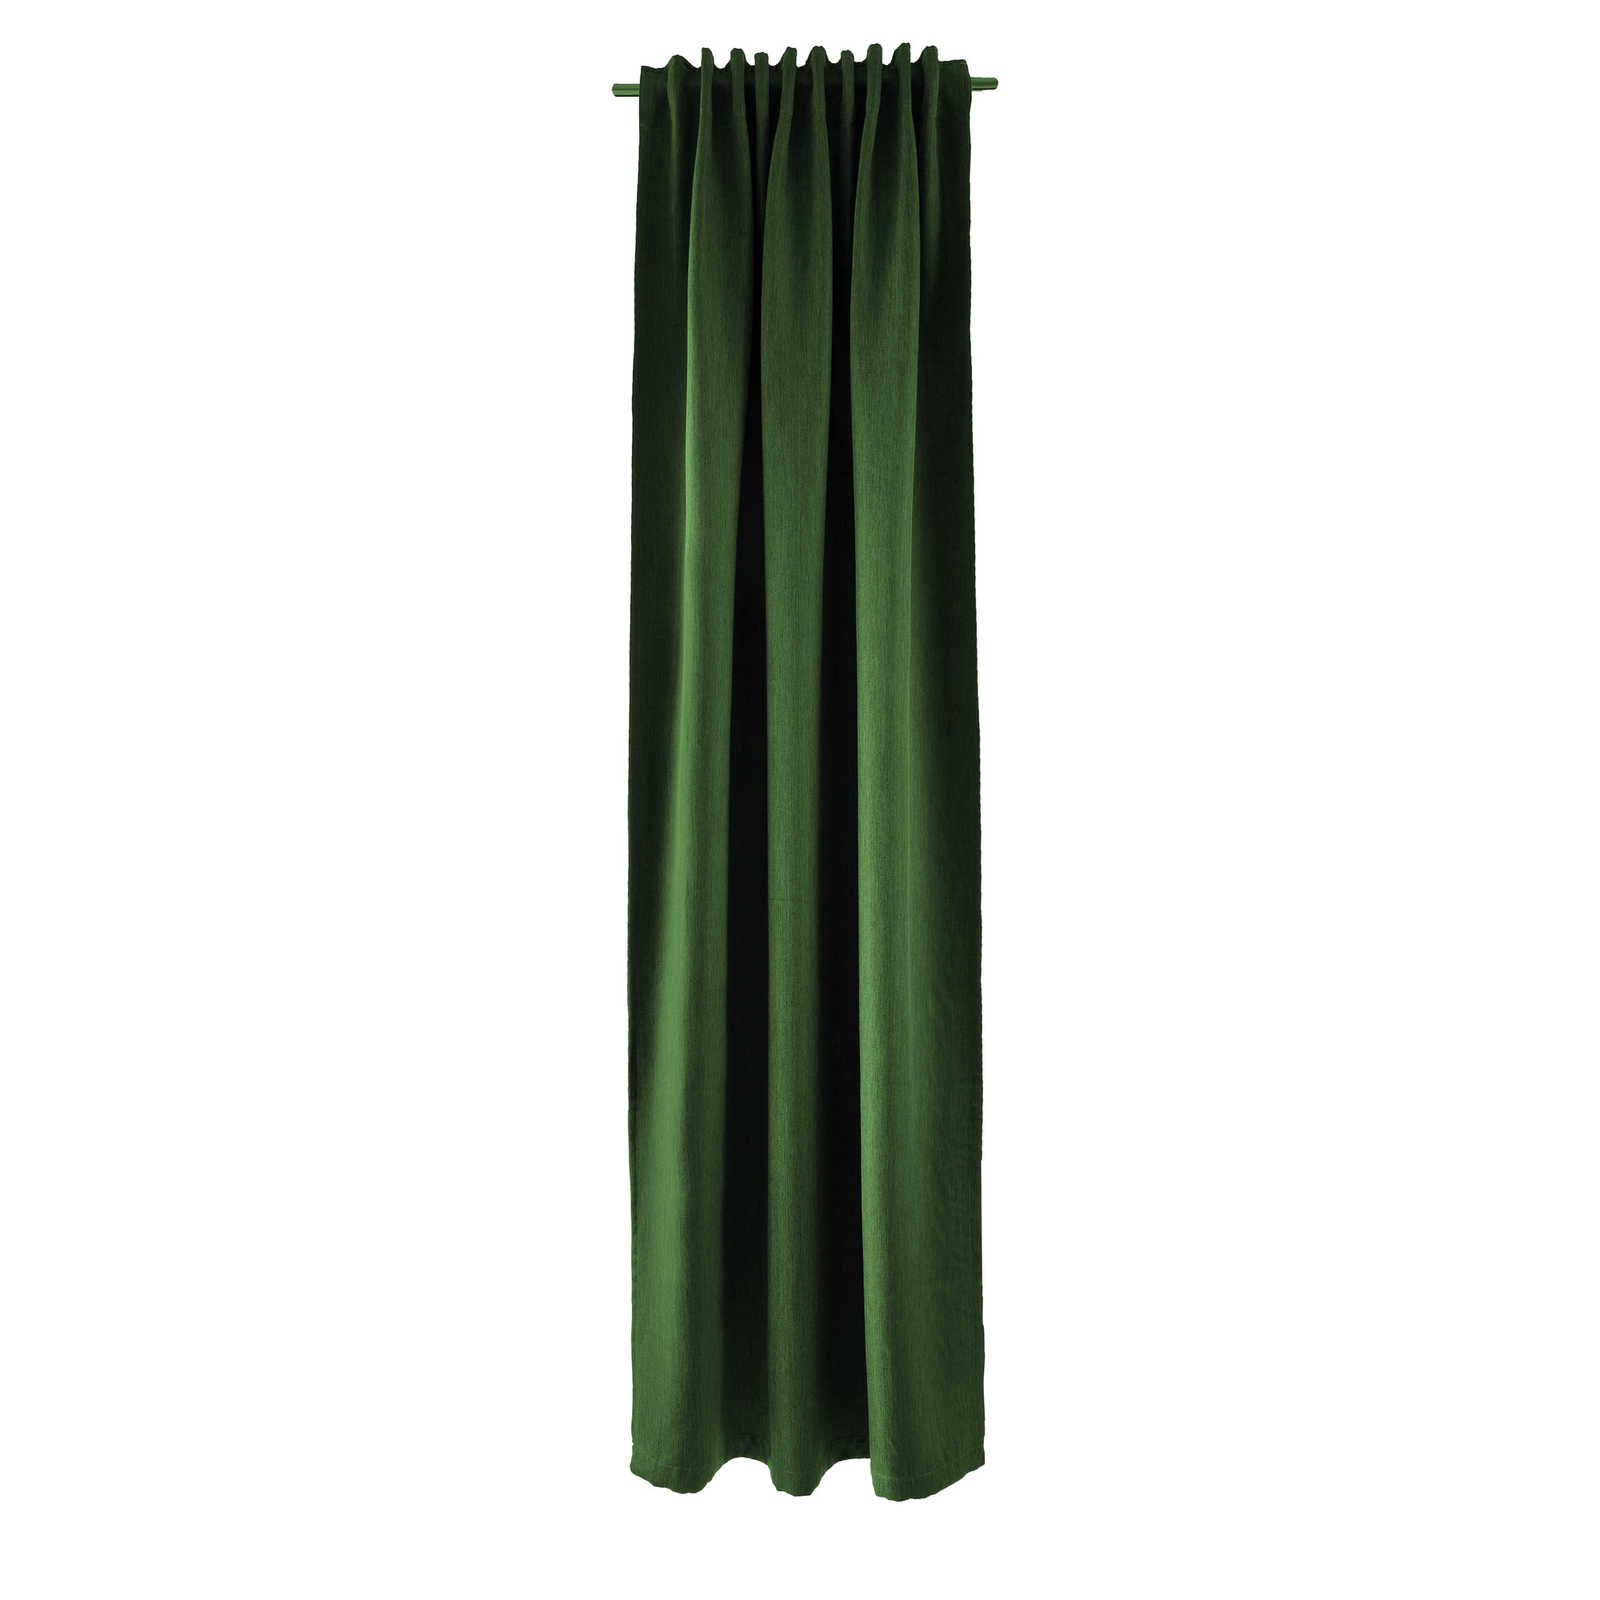 Fular Bucle Decorativo 140 cm x 245 cm Fibra Artificial Verde Oscuro
